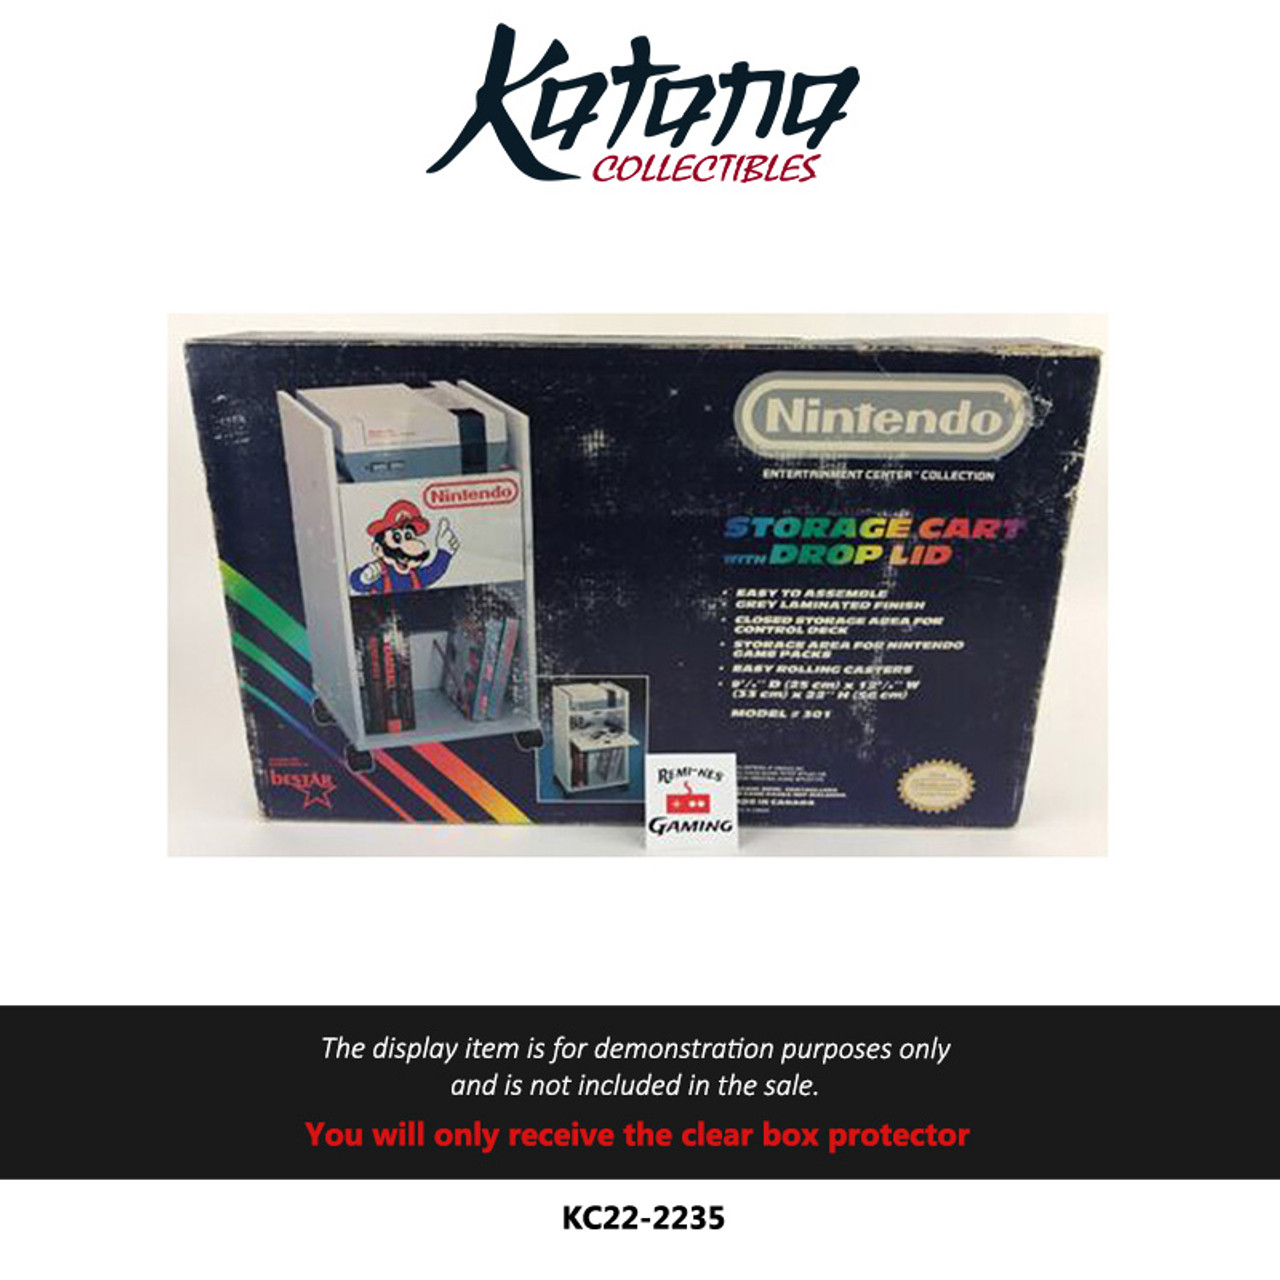 Katana Collectibles Protector For Nintendo NES Rolling Cart